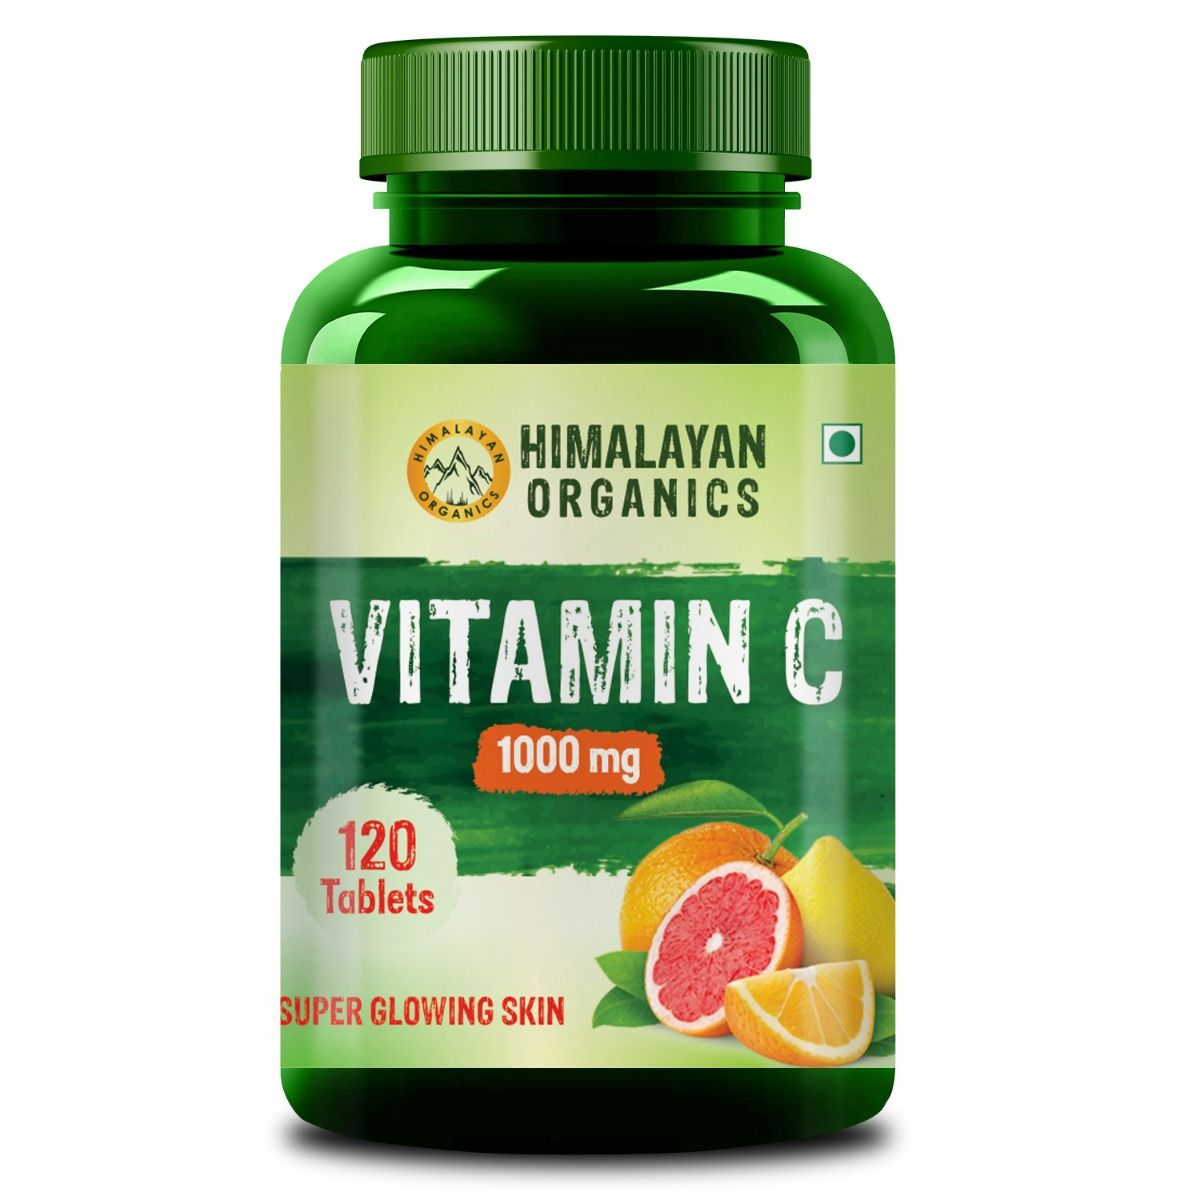 Buy Himalayan Organics Vitamin C 1000 mg, 120 Tablets Online